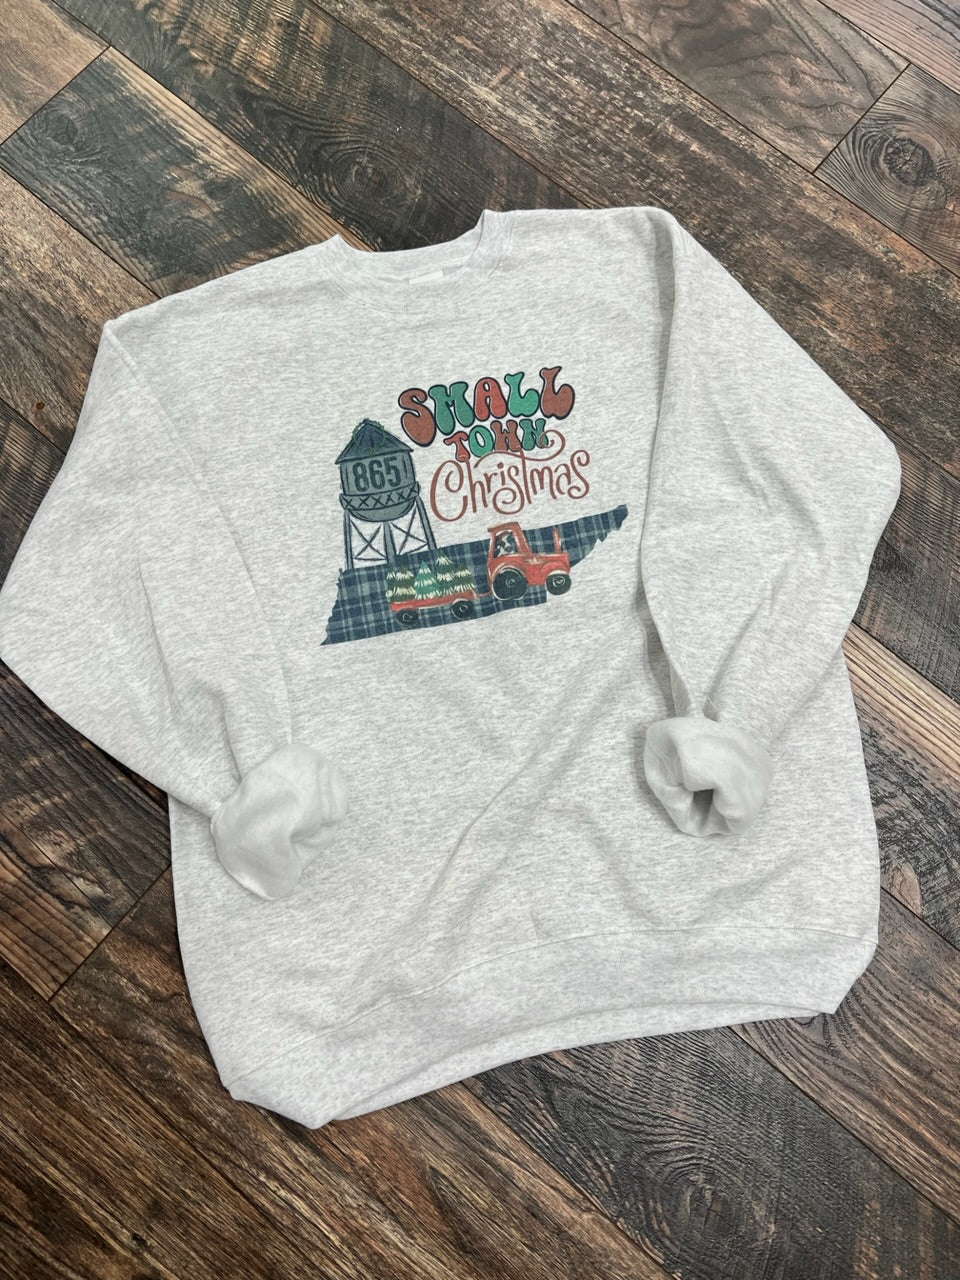 865 water tower Christmas sweatshirt